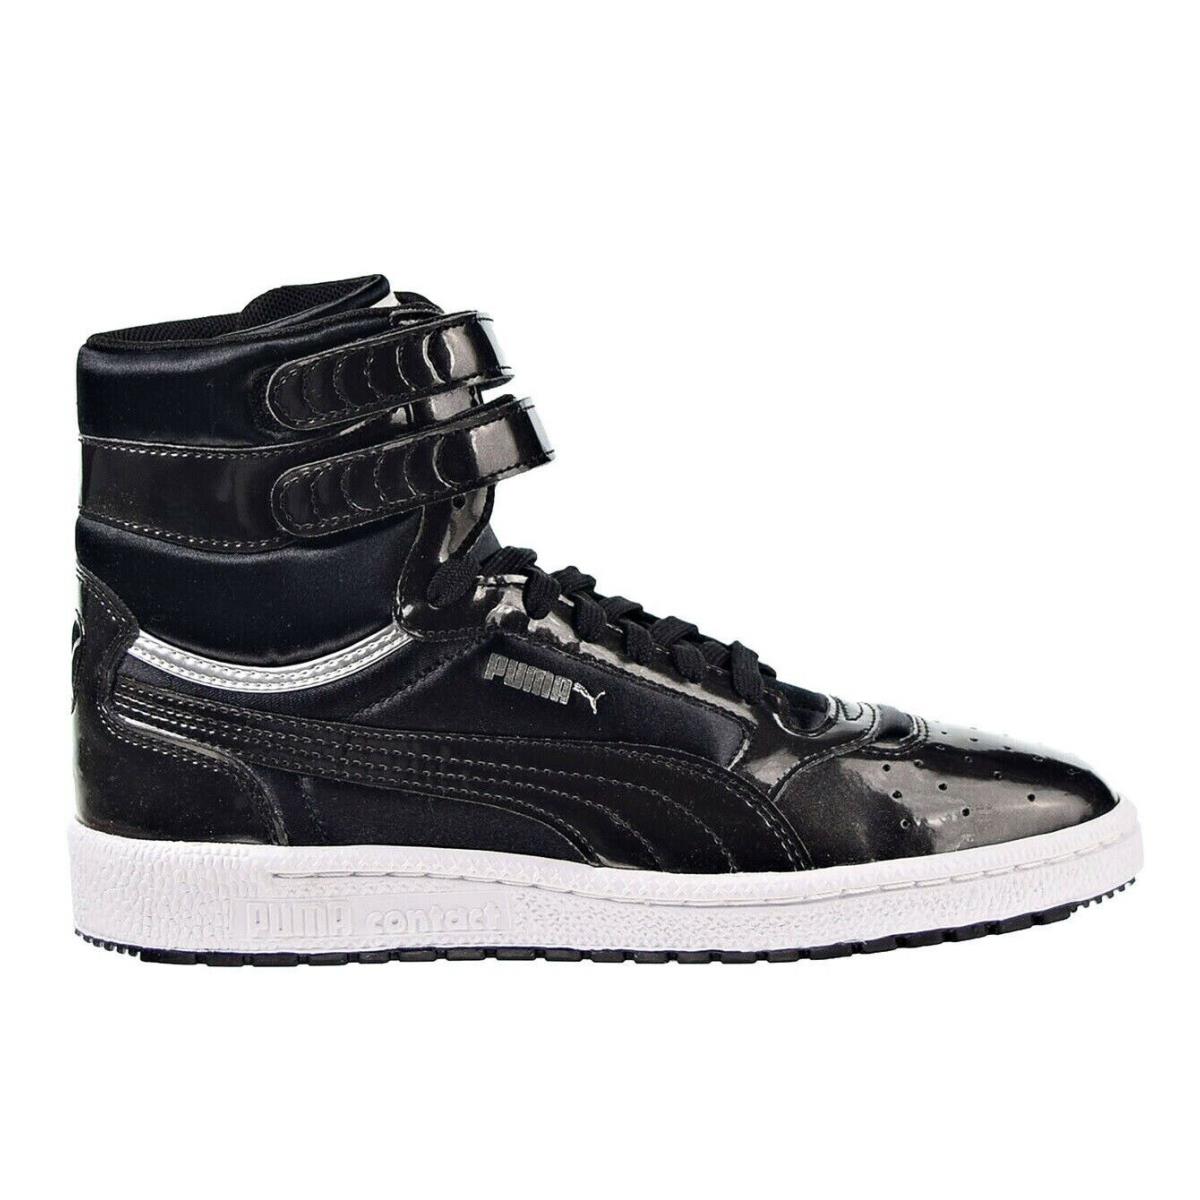 Puma Sky II HI Explosive Pack Womens 36337401 Black Patent Leather Shoes Size 9